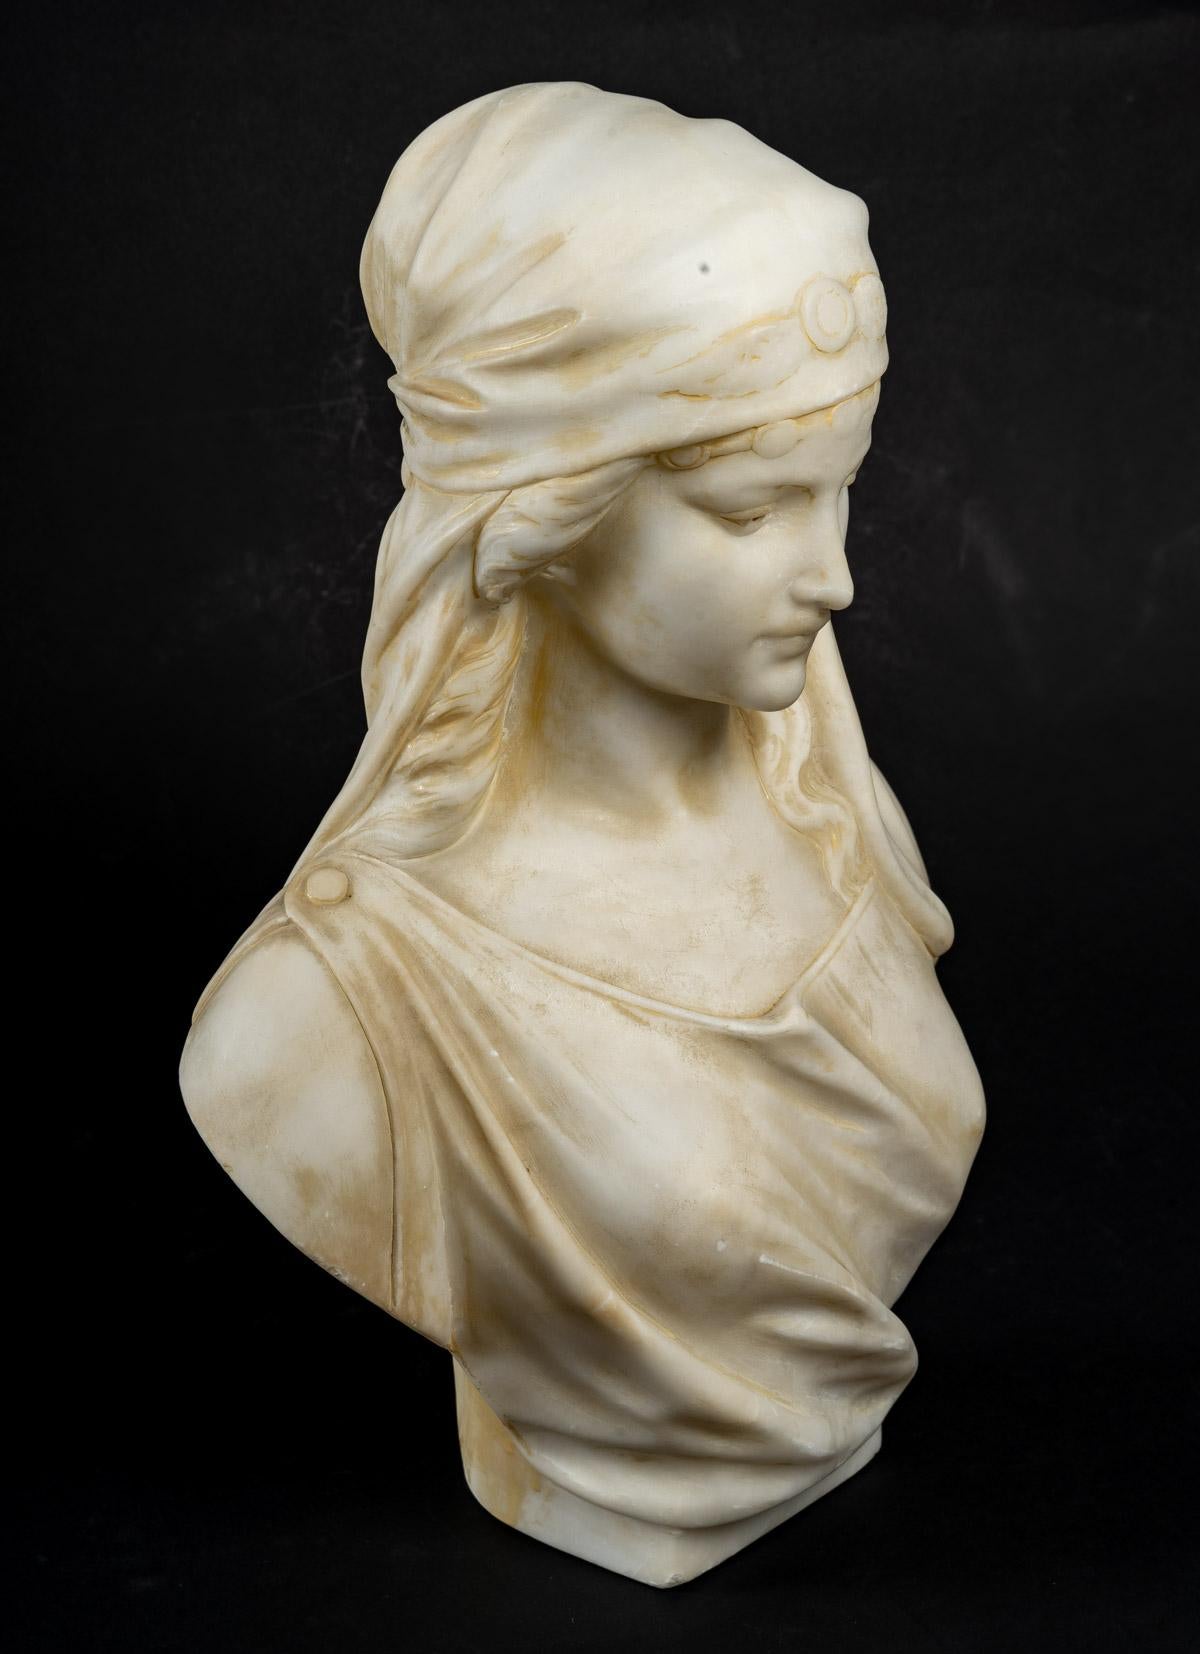 Alabaster bust of a woman by Guglielmo Pugi
Alabaster bust of a woman by Guglielmo Pugi (1850 - 1915).
Measures: H: 35 cm, W: 24 cm, D: 8 cm.
 